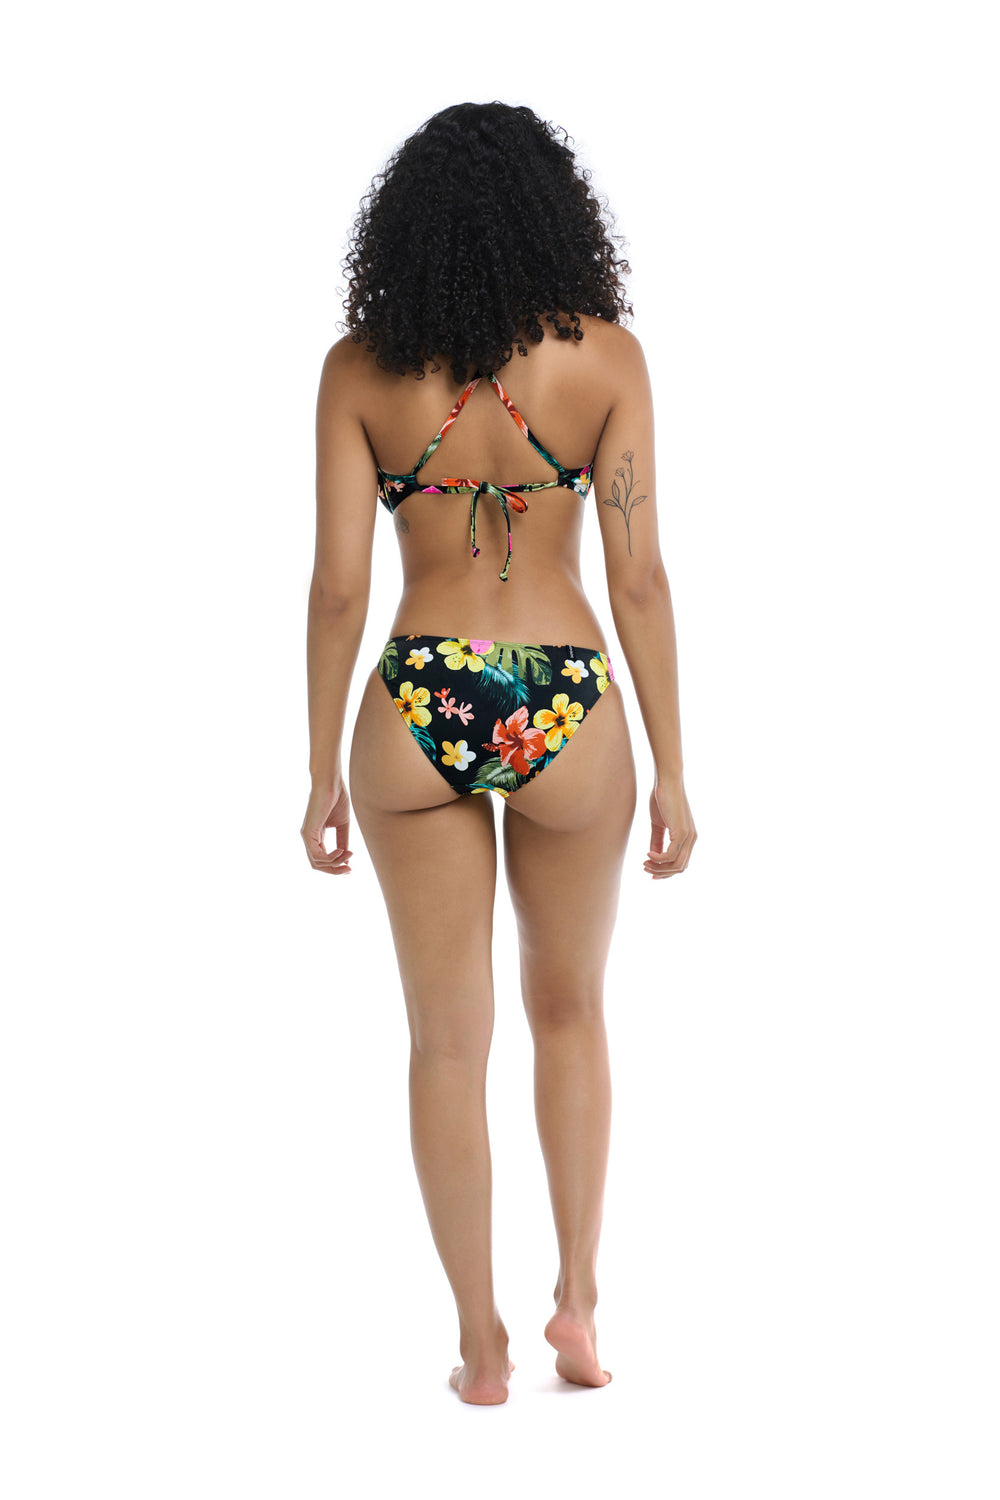 Body Glove Tropical Island Bikini Bottom - Black